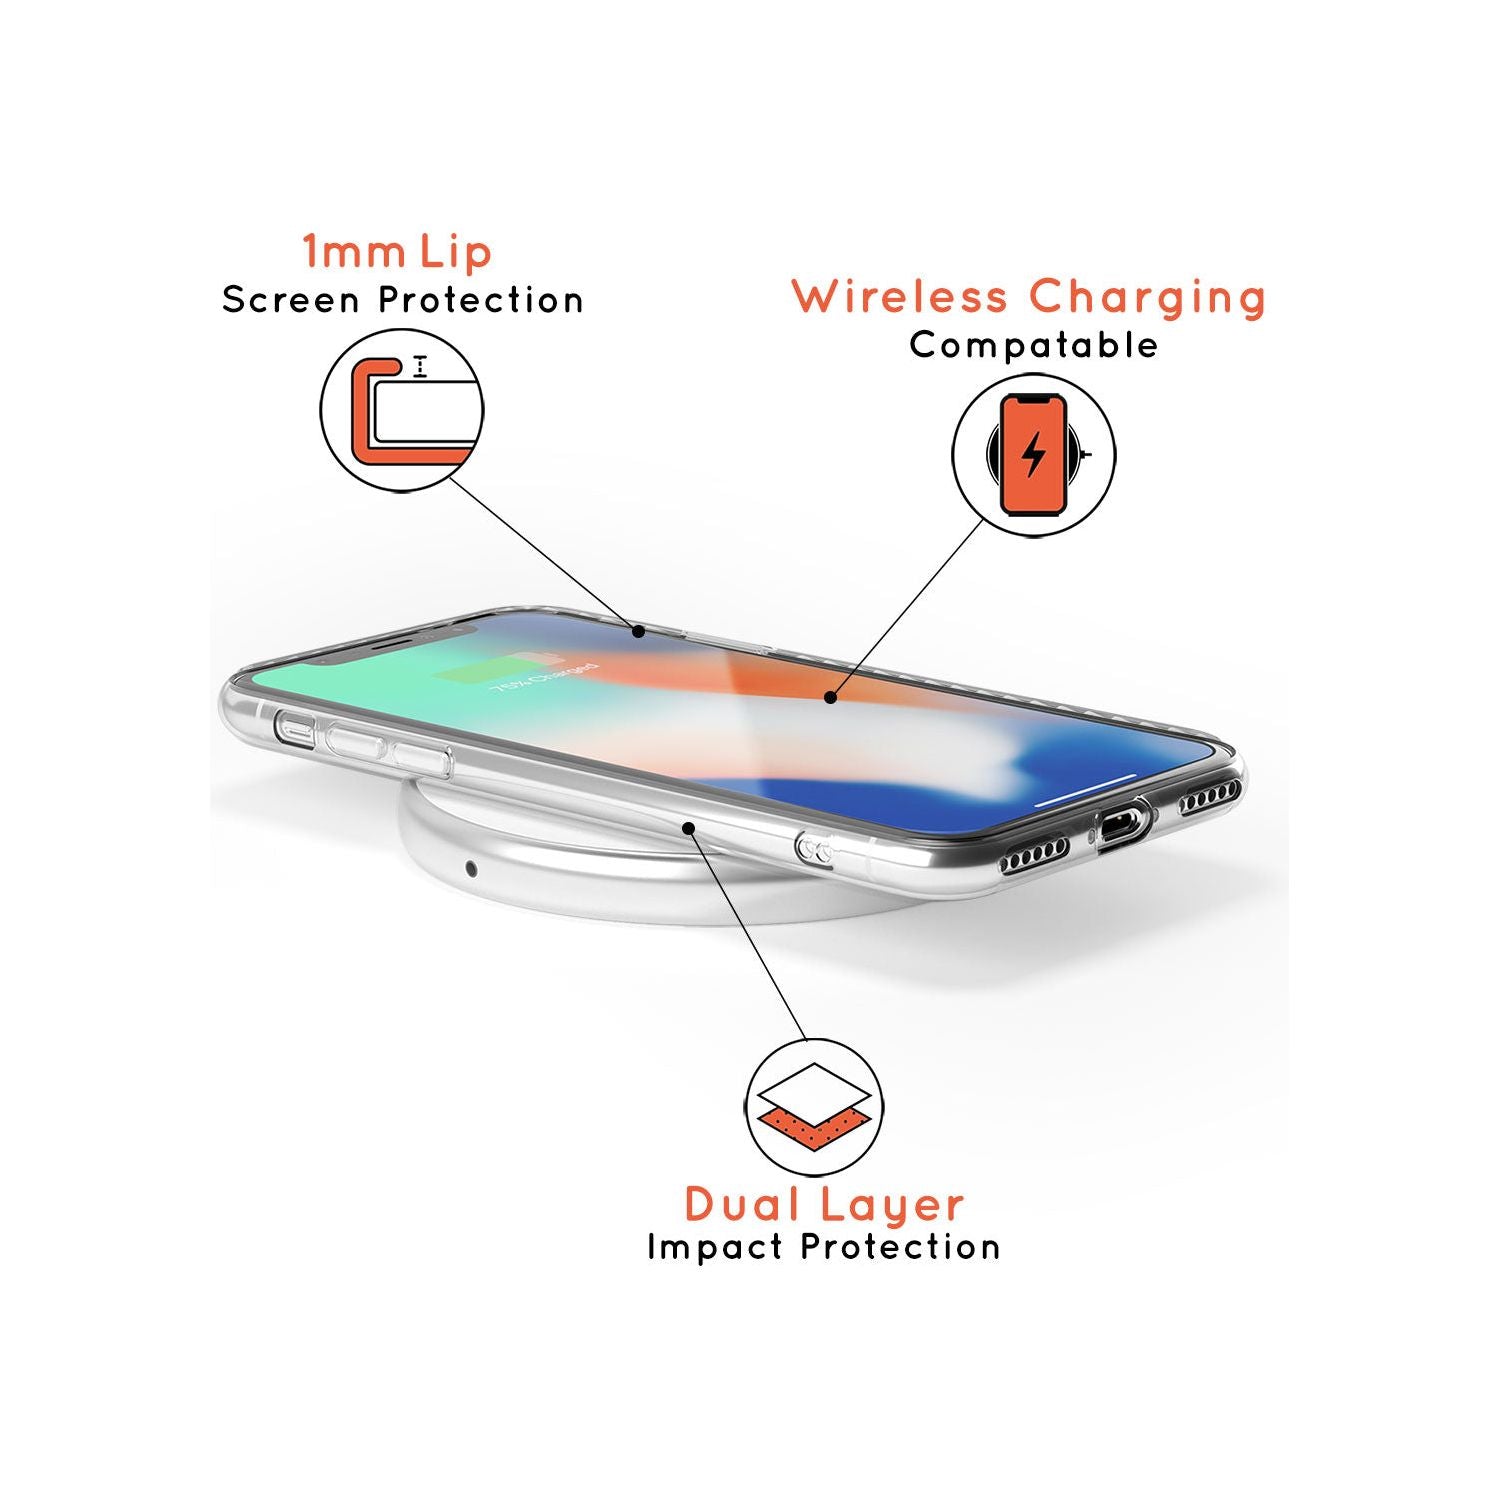 Beagle Dog Pattern Clear Slim TPU Phone Case for iPhone SE 8 7 Plus